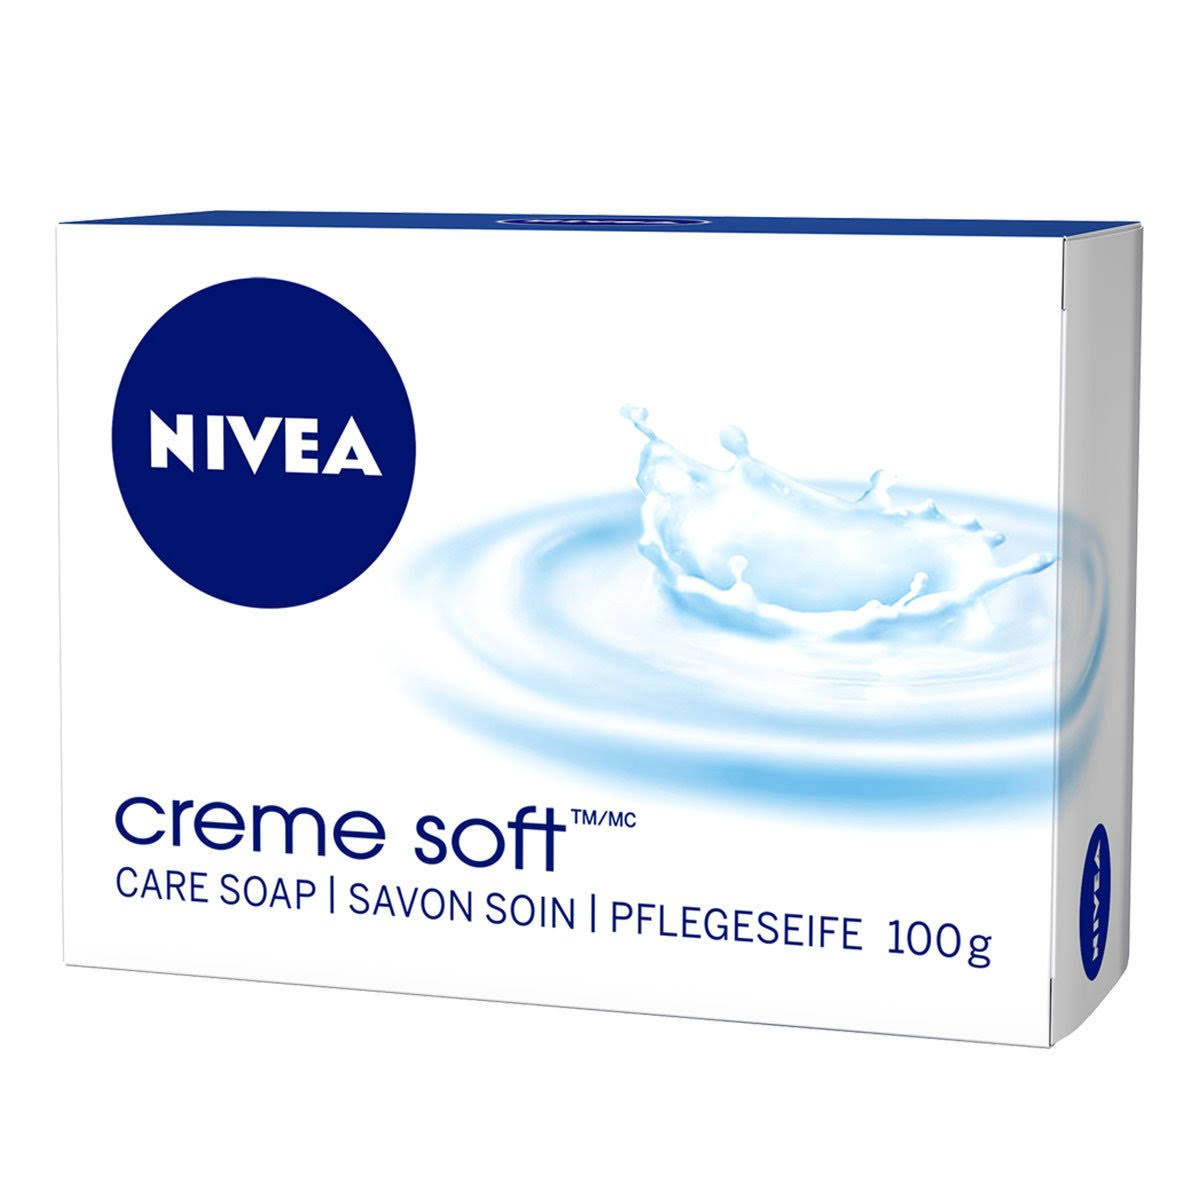 Nivea Creme Soft Care Soap - 100g